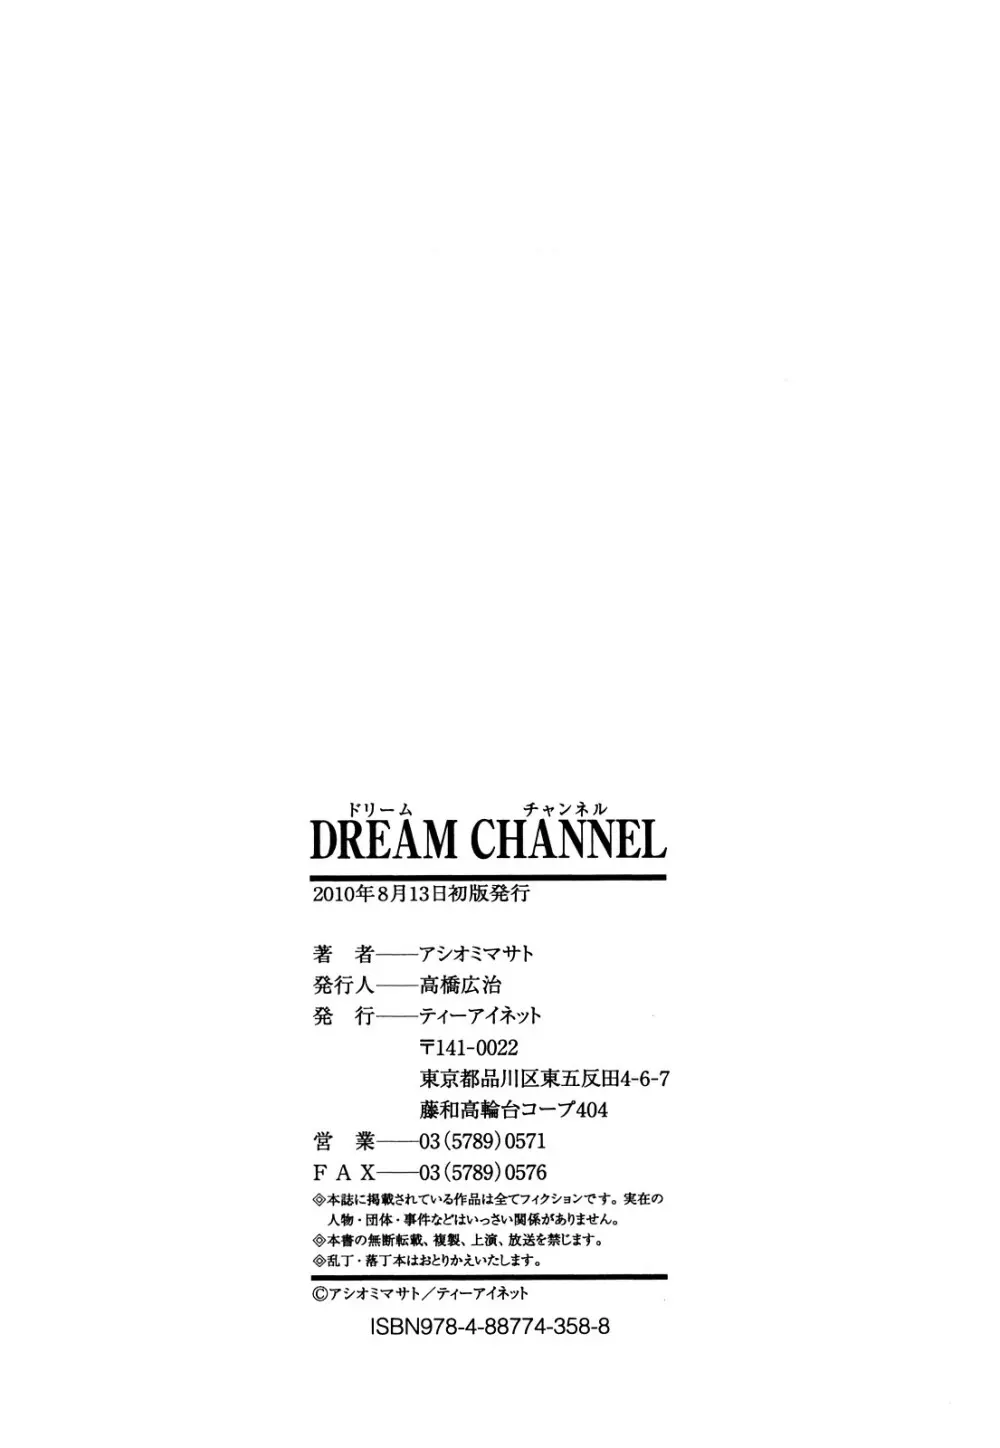 DREAM CHANNEL 207ページ